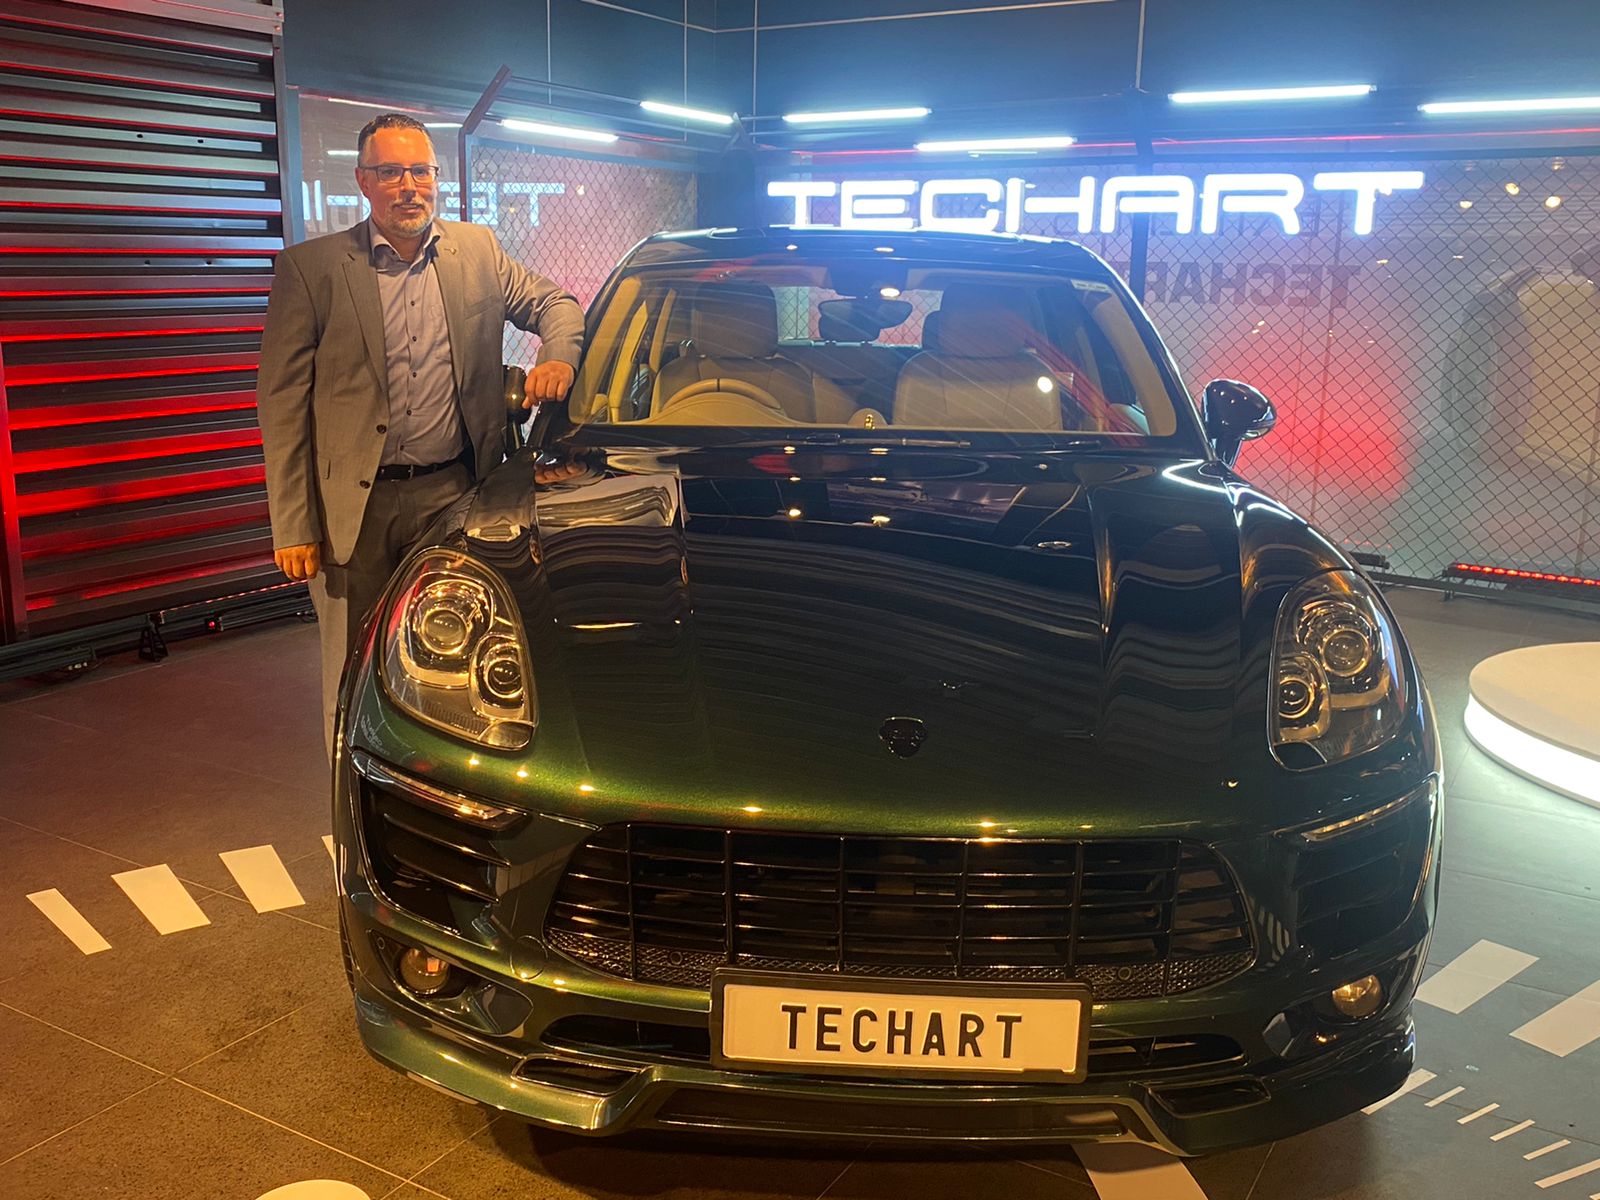 TECHART - The Porsche Modifying Specialist Comes To India!